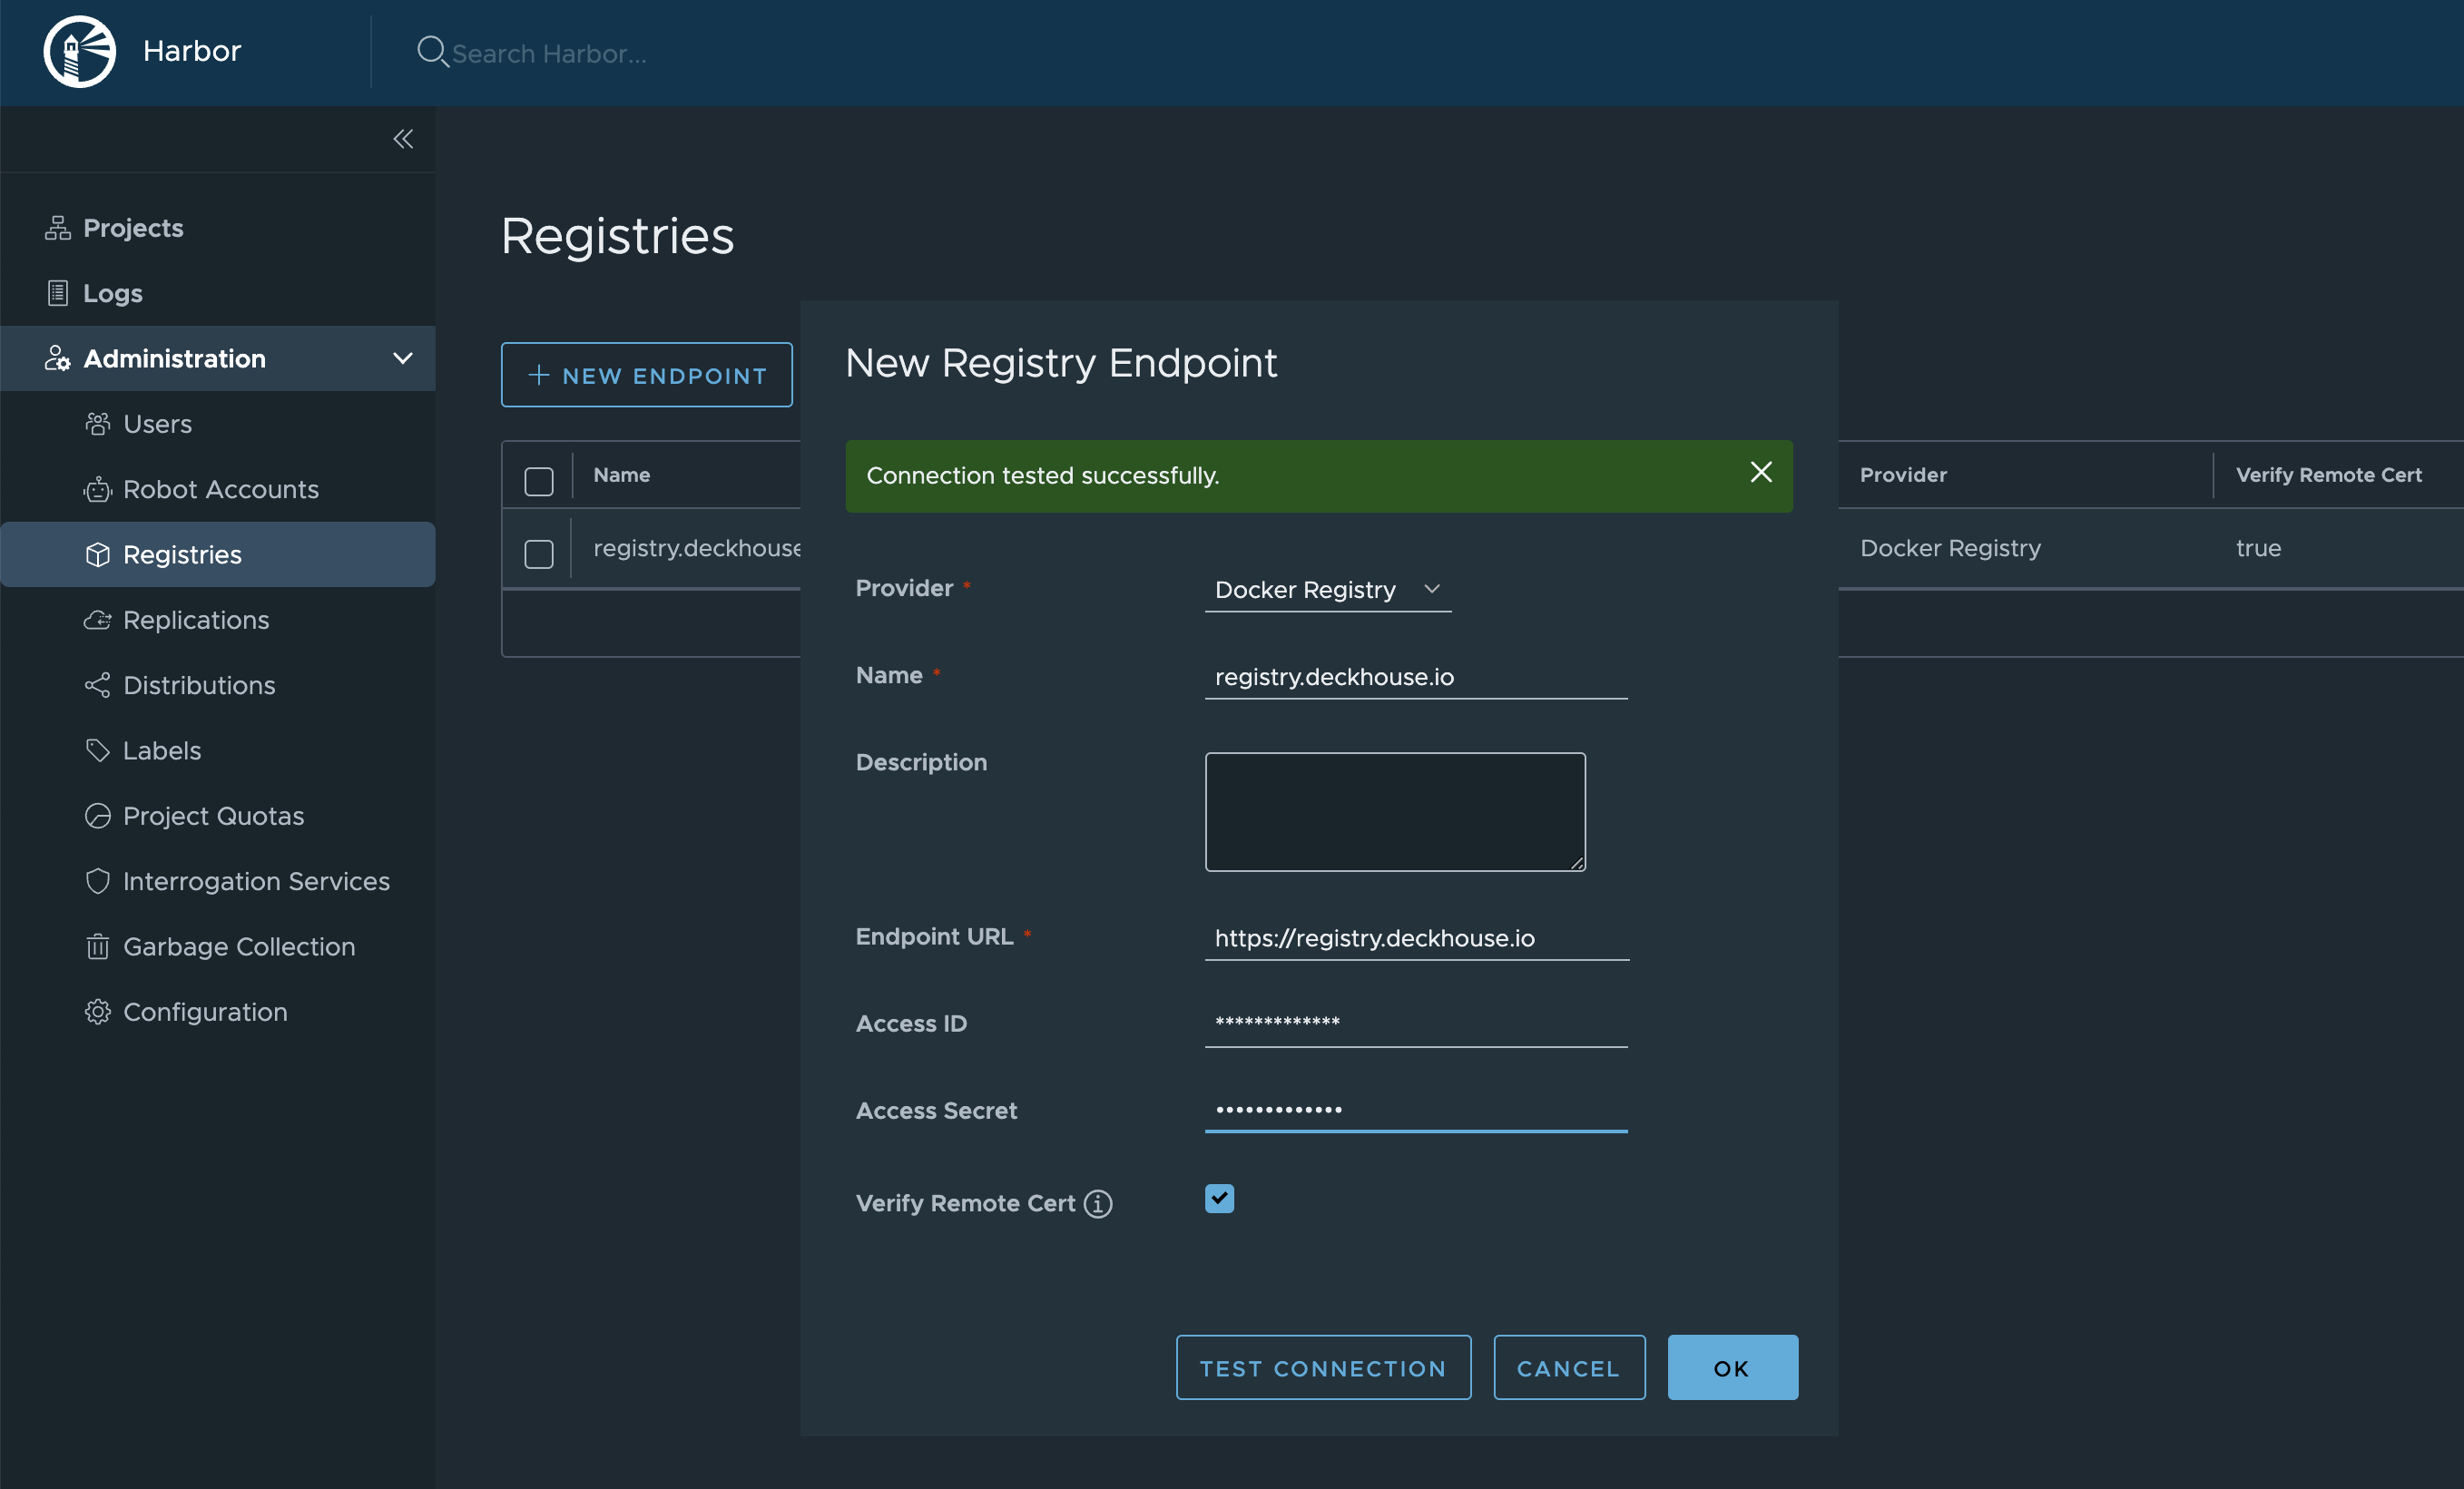 Create a Registry